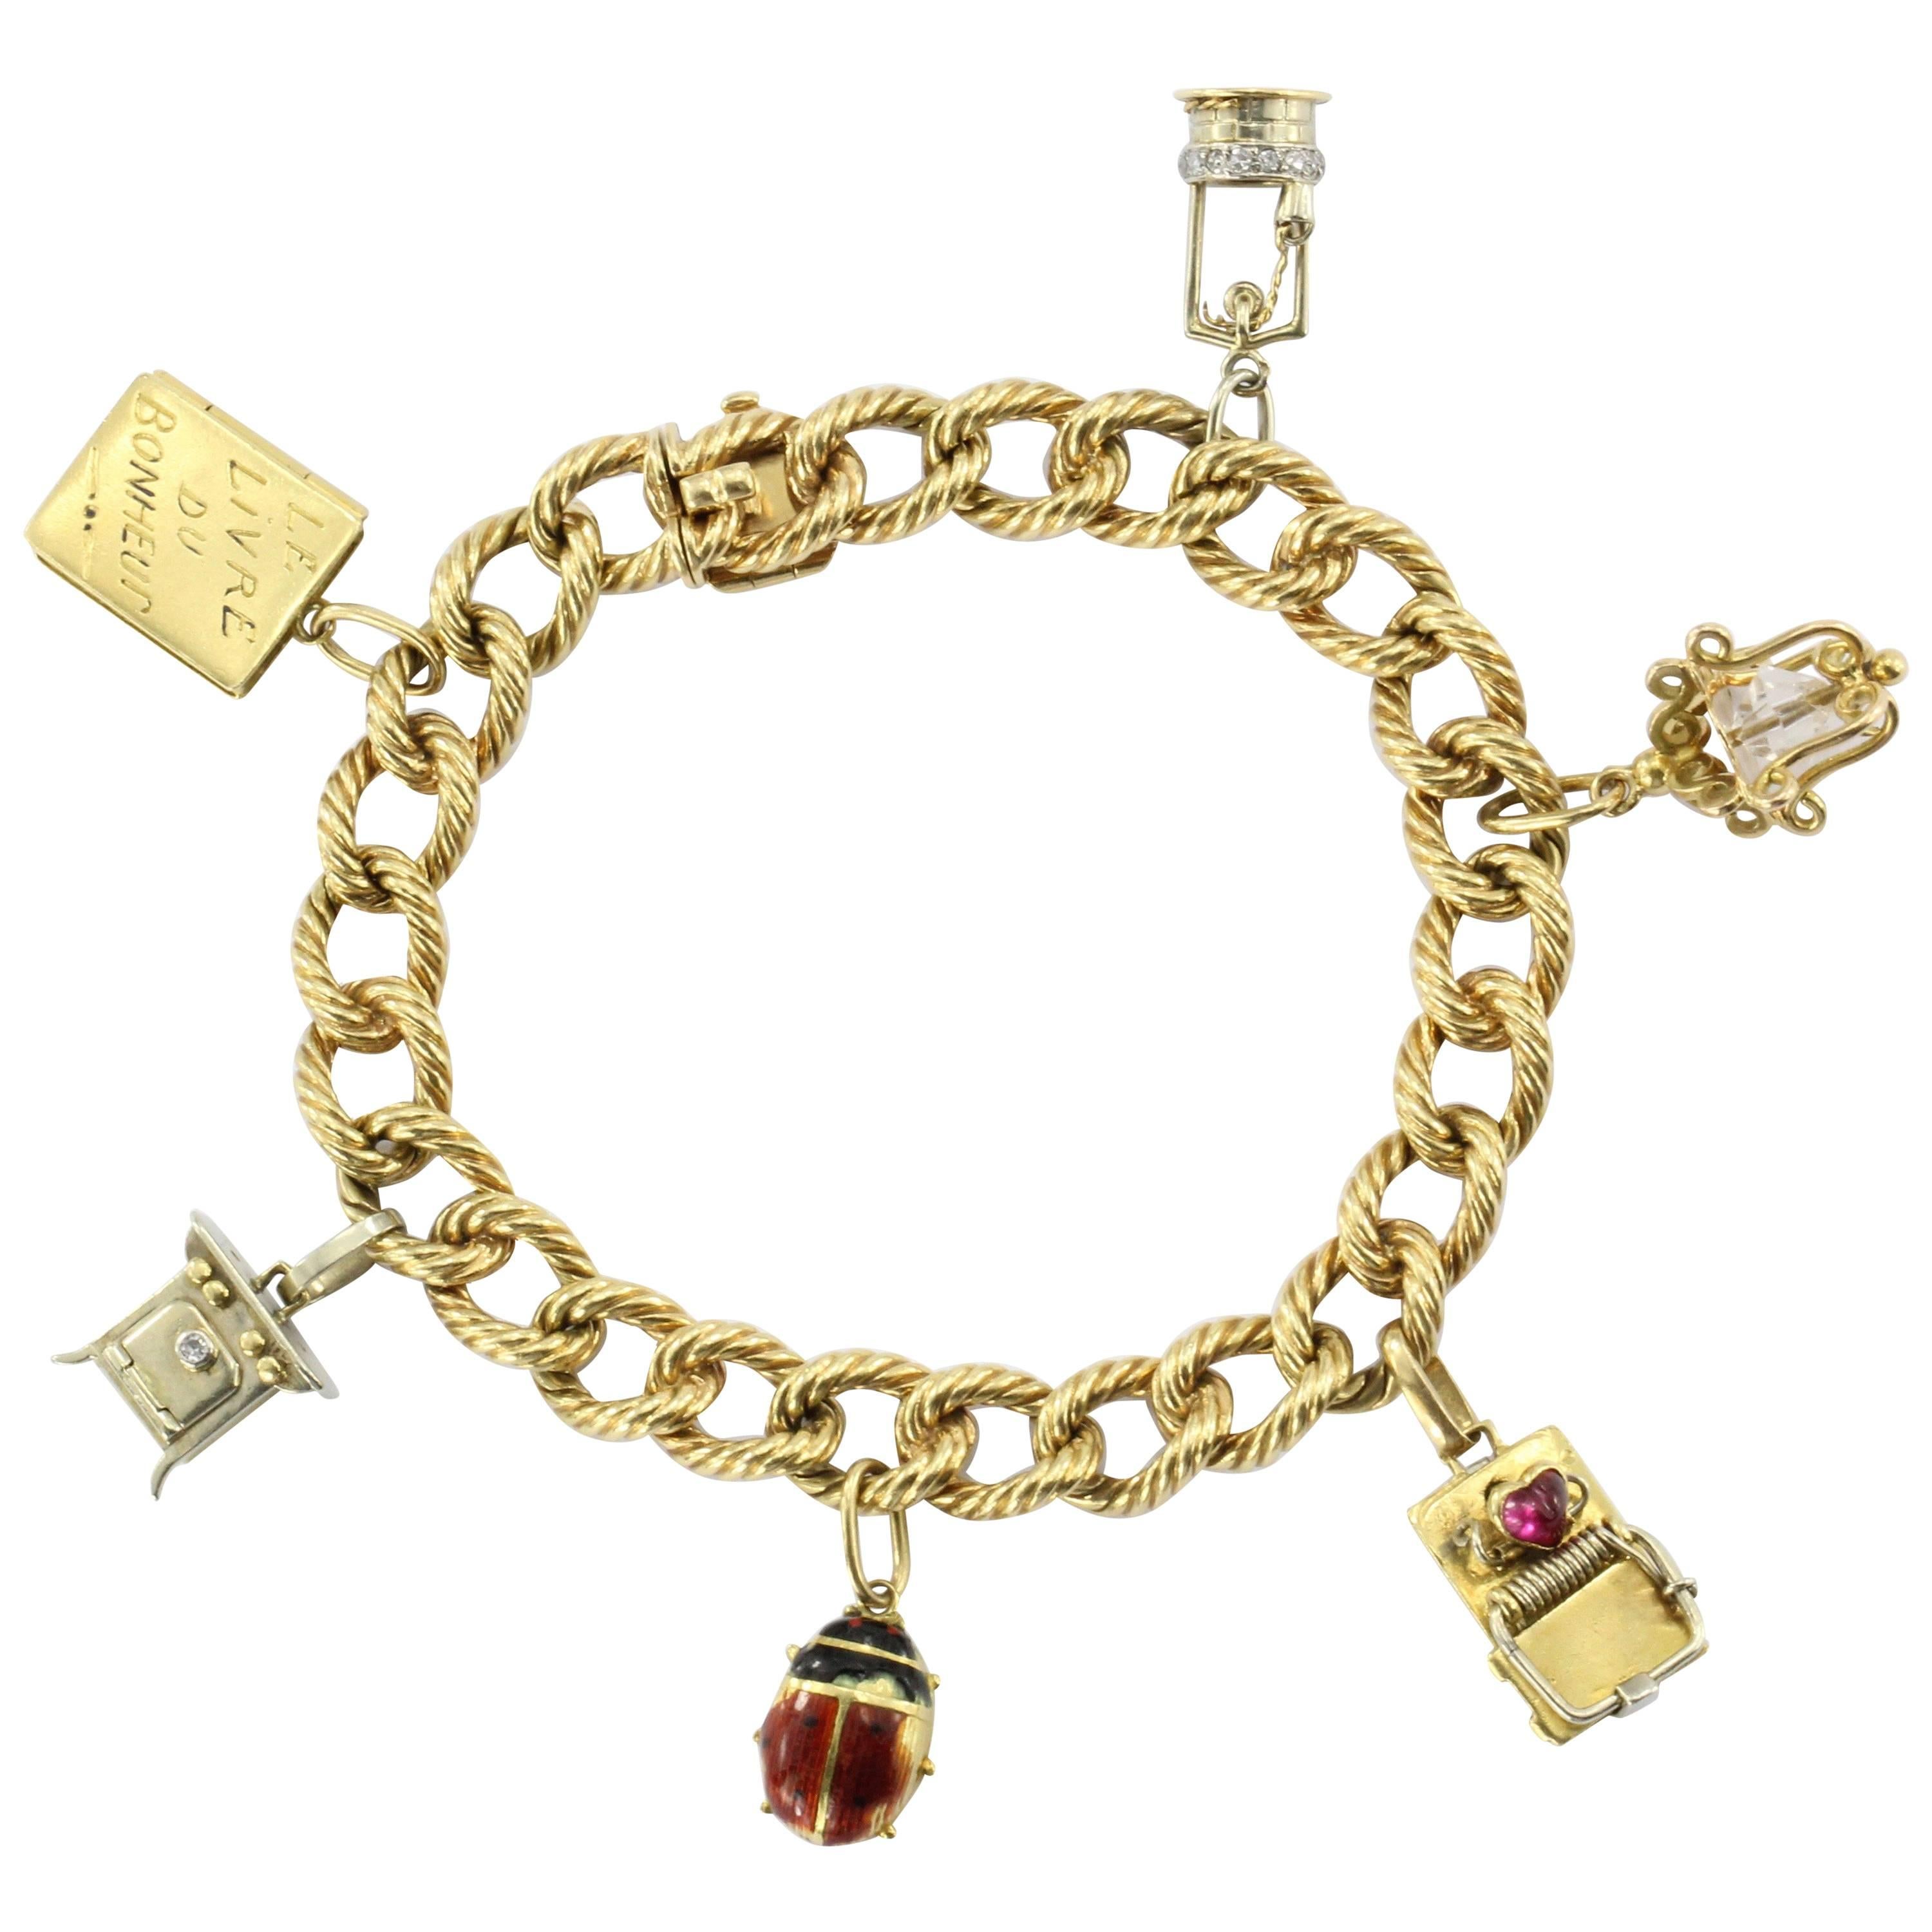 Cartier 18 Karat Gold French Retro Loaded Charm Bracelet, circa 1950s